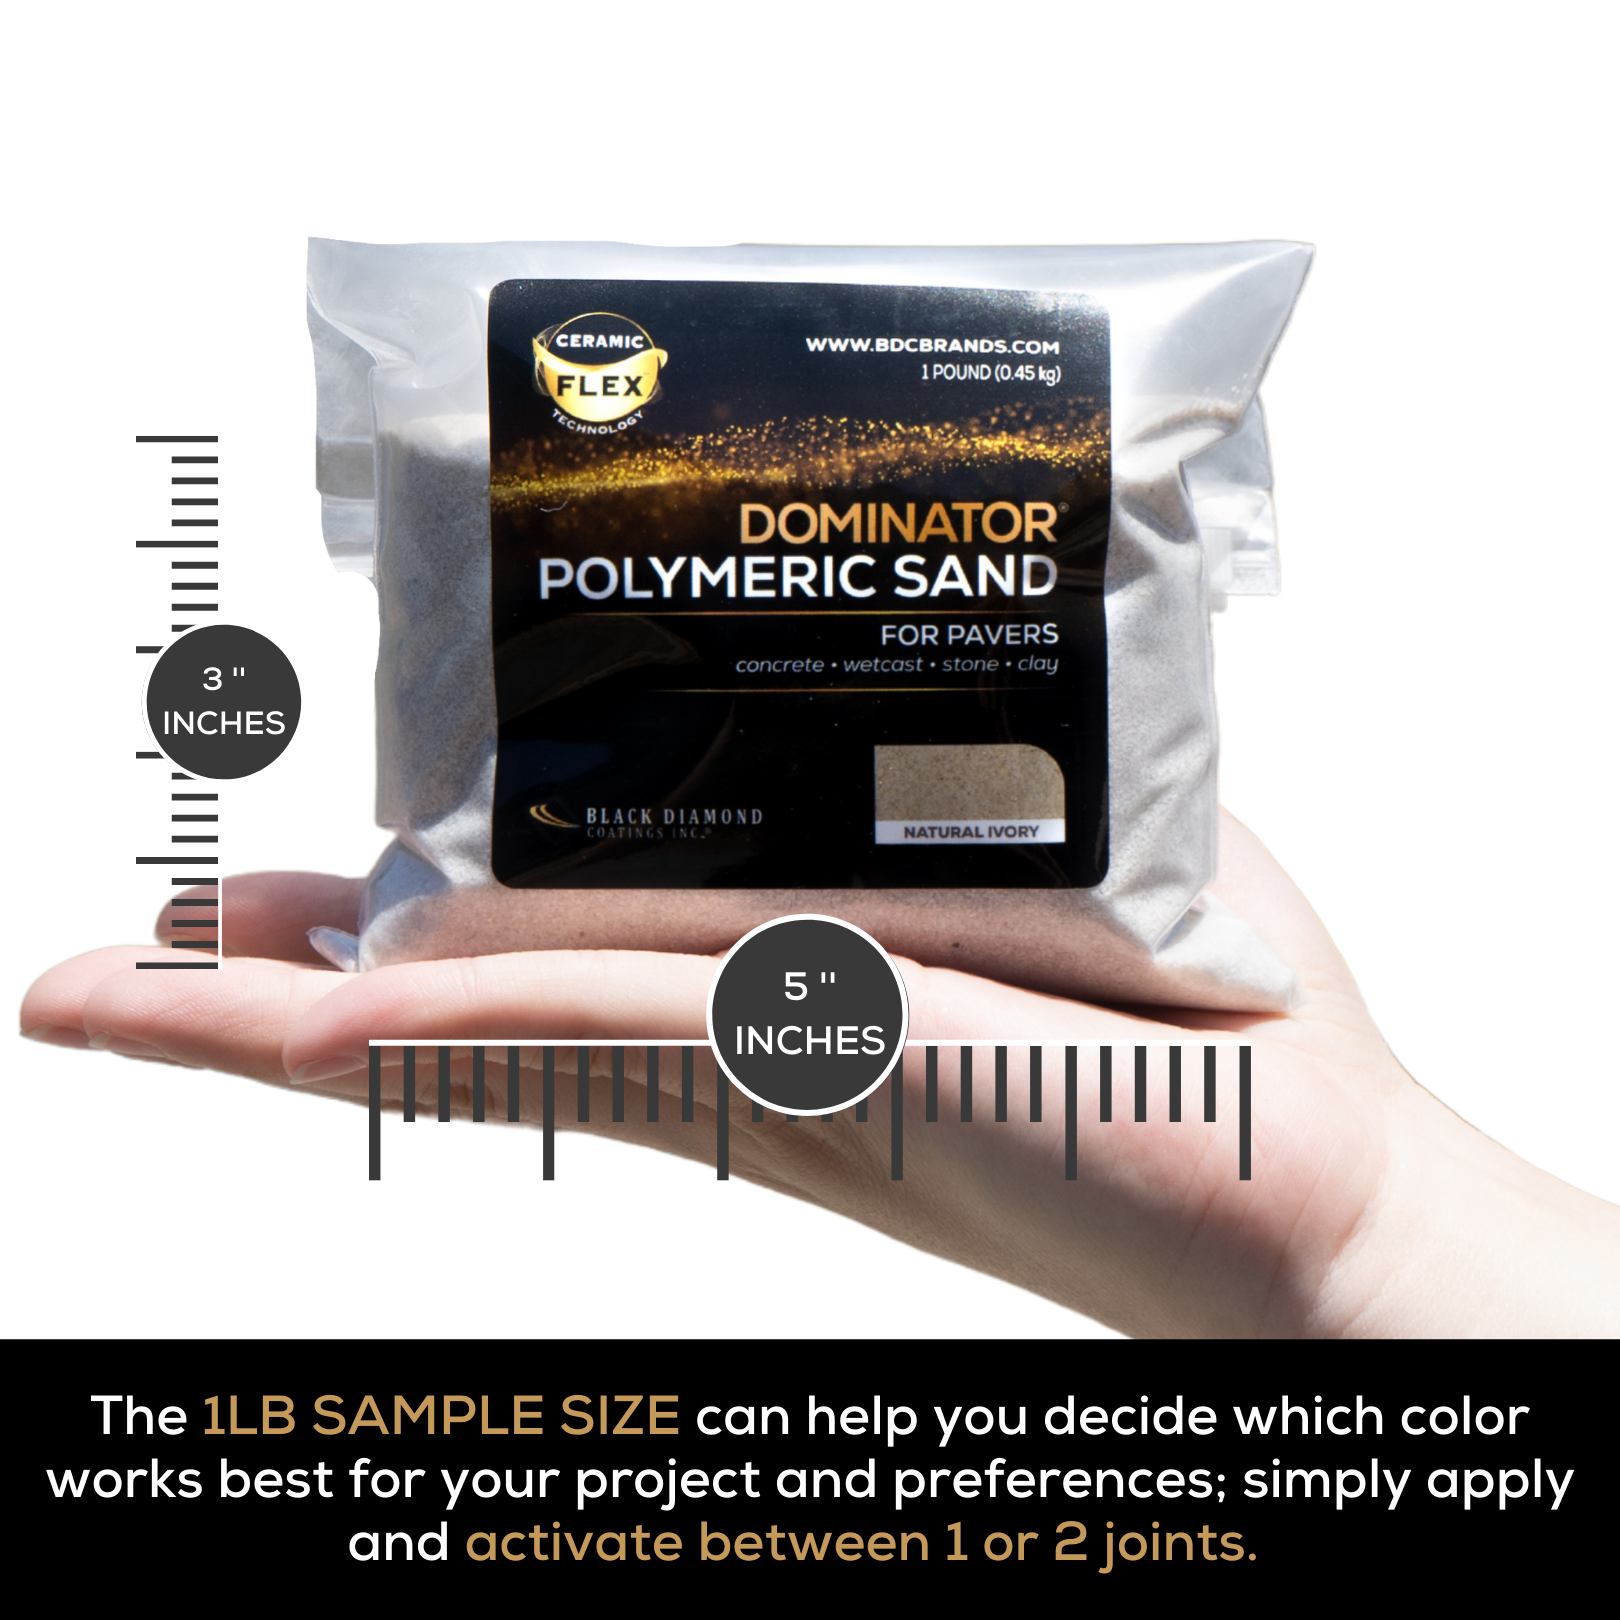 SAMPLE SIZE DOMINATOR Polymeric Sand with Revolutionary Ceramic Flex